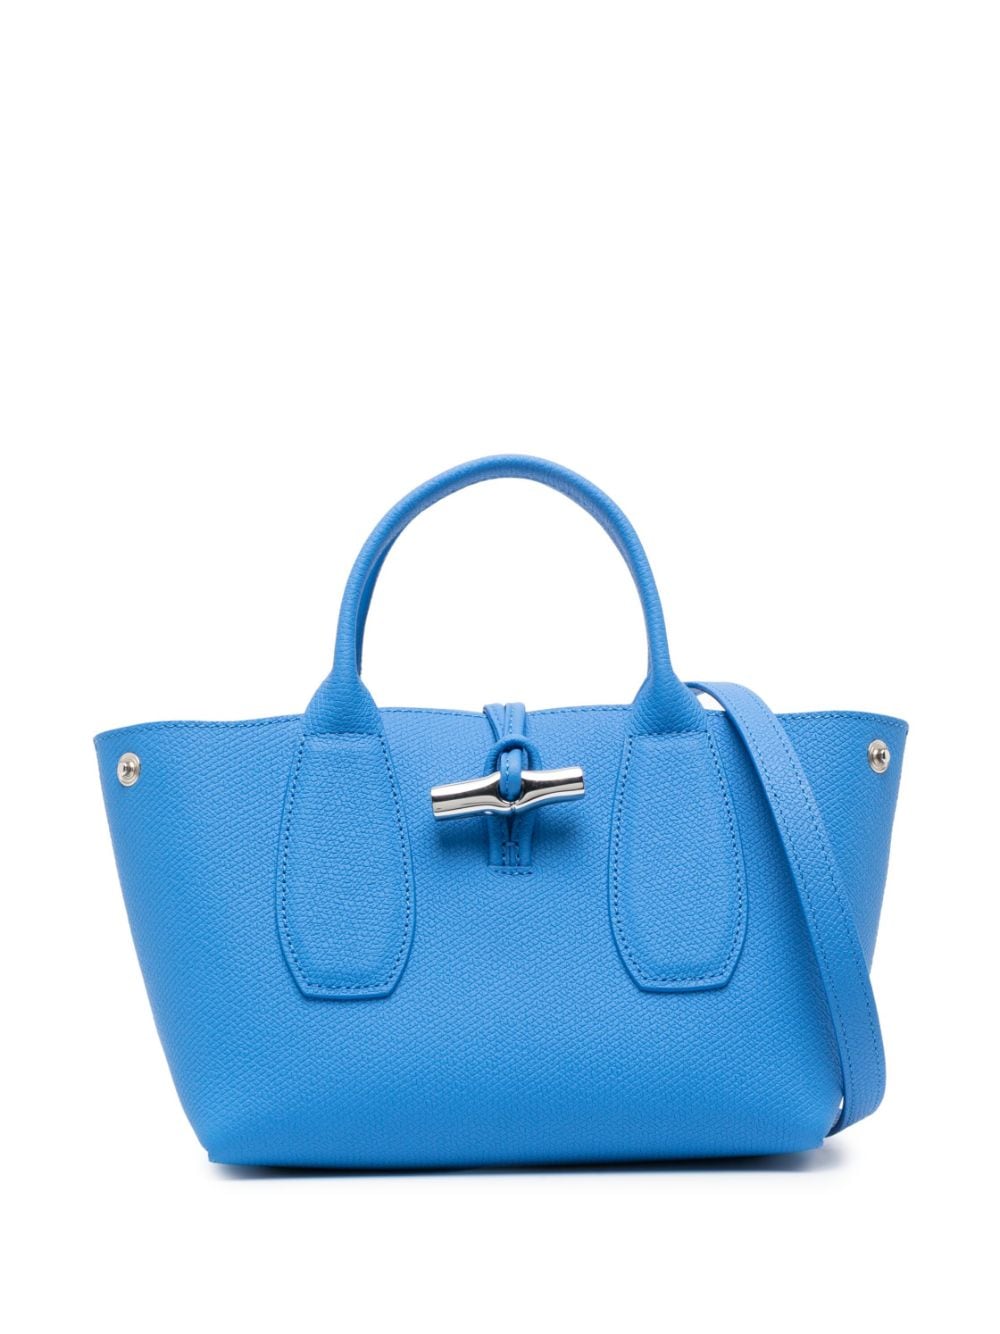 Longchamp Small Roseau Leather Tote Bag - Blue